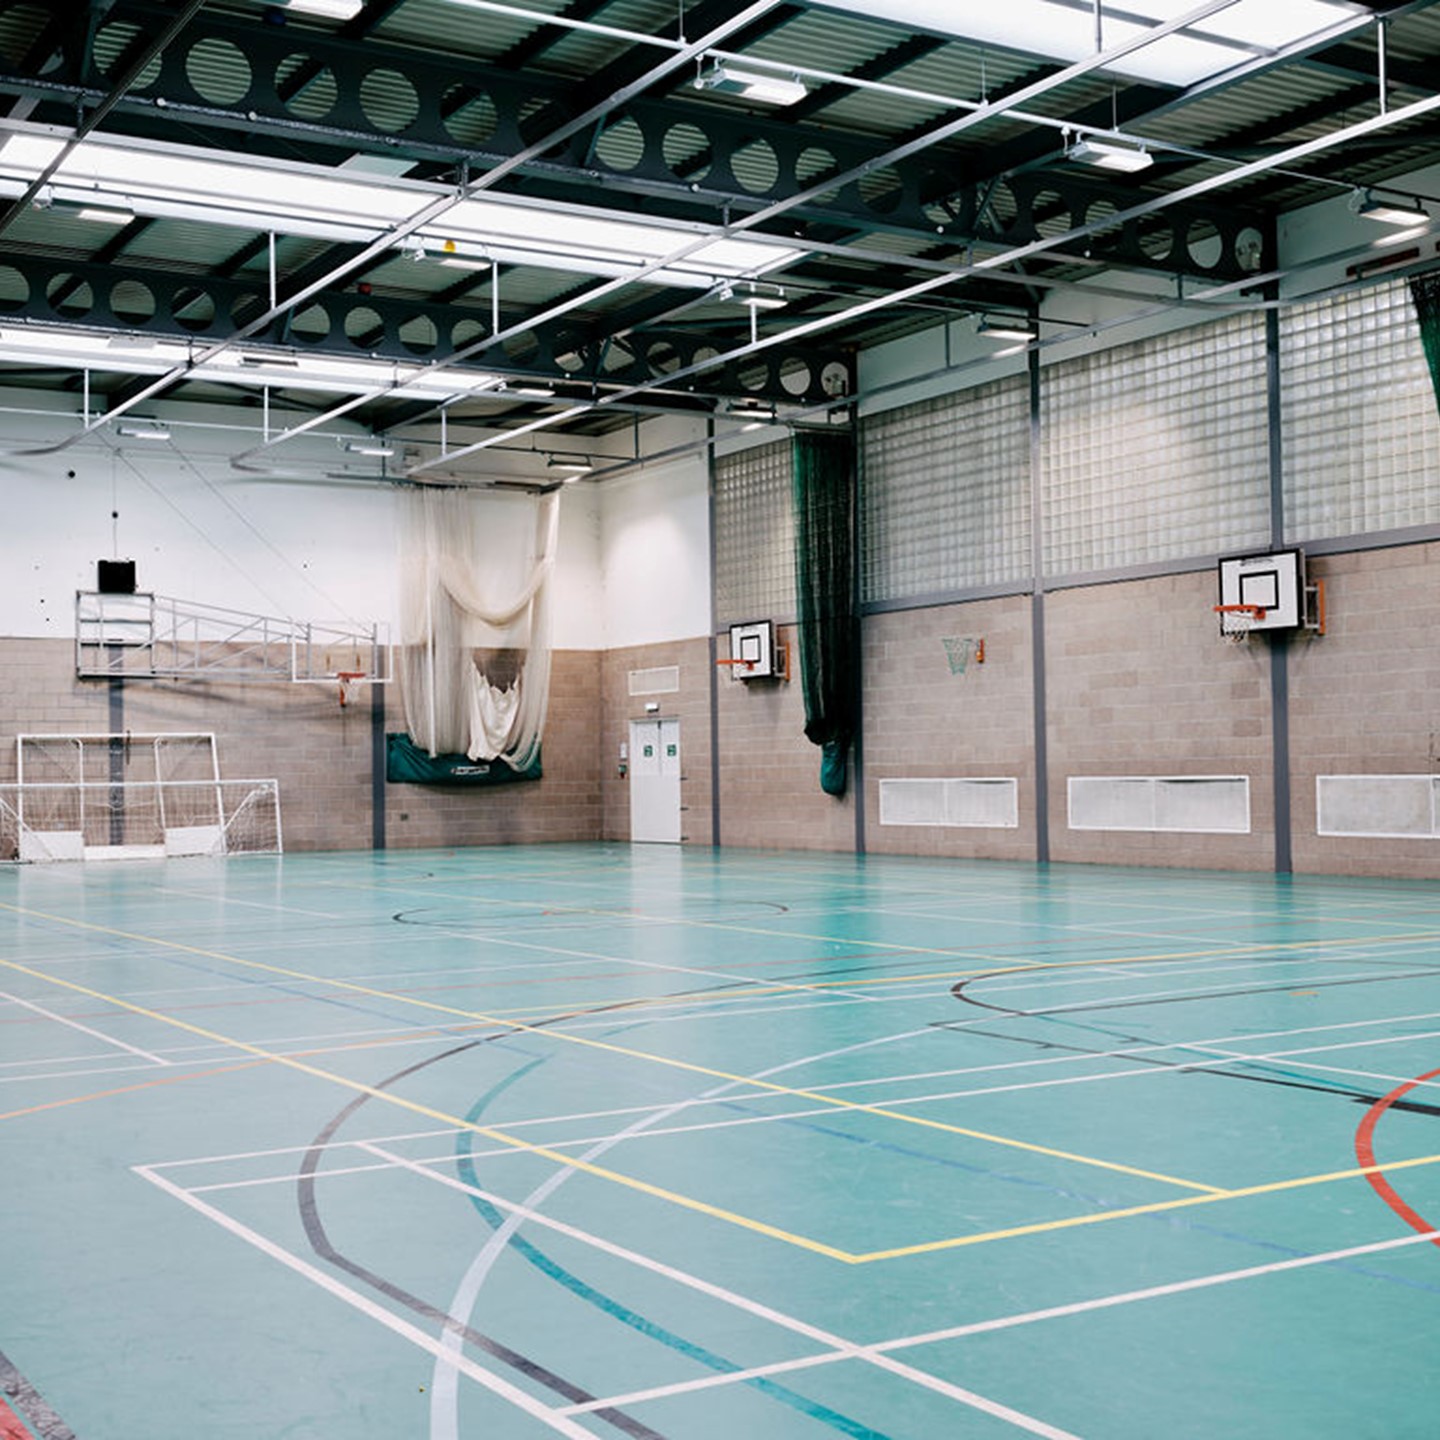 Indoor gymnasium and basketball court